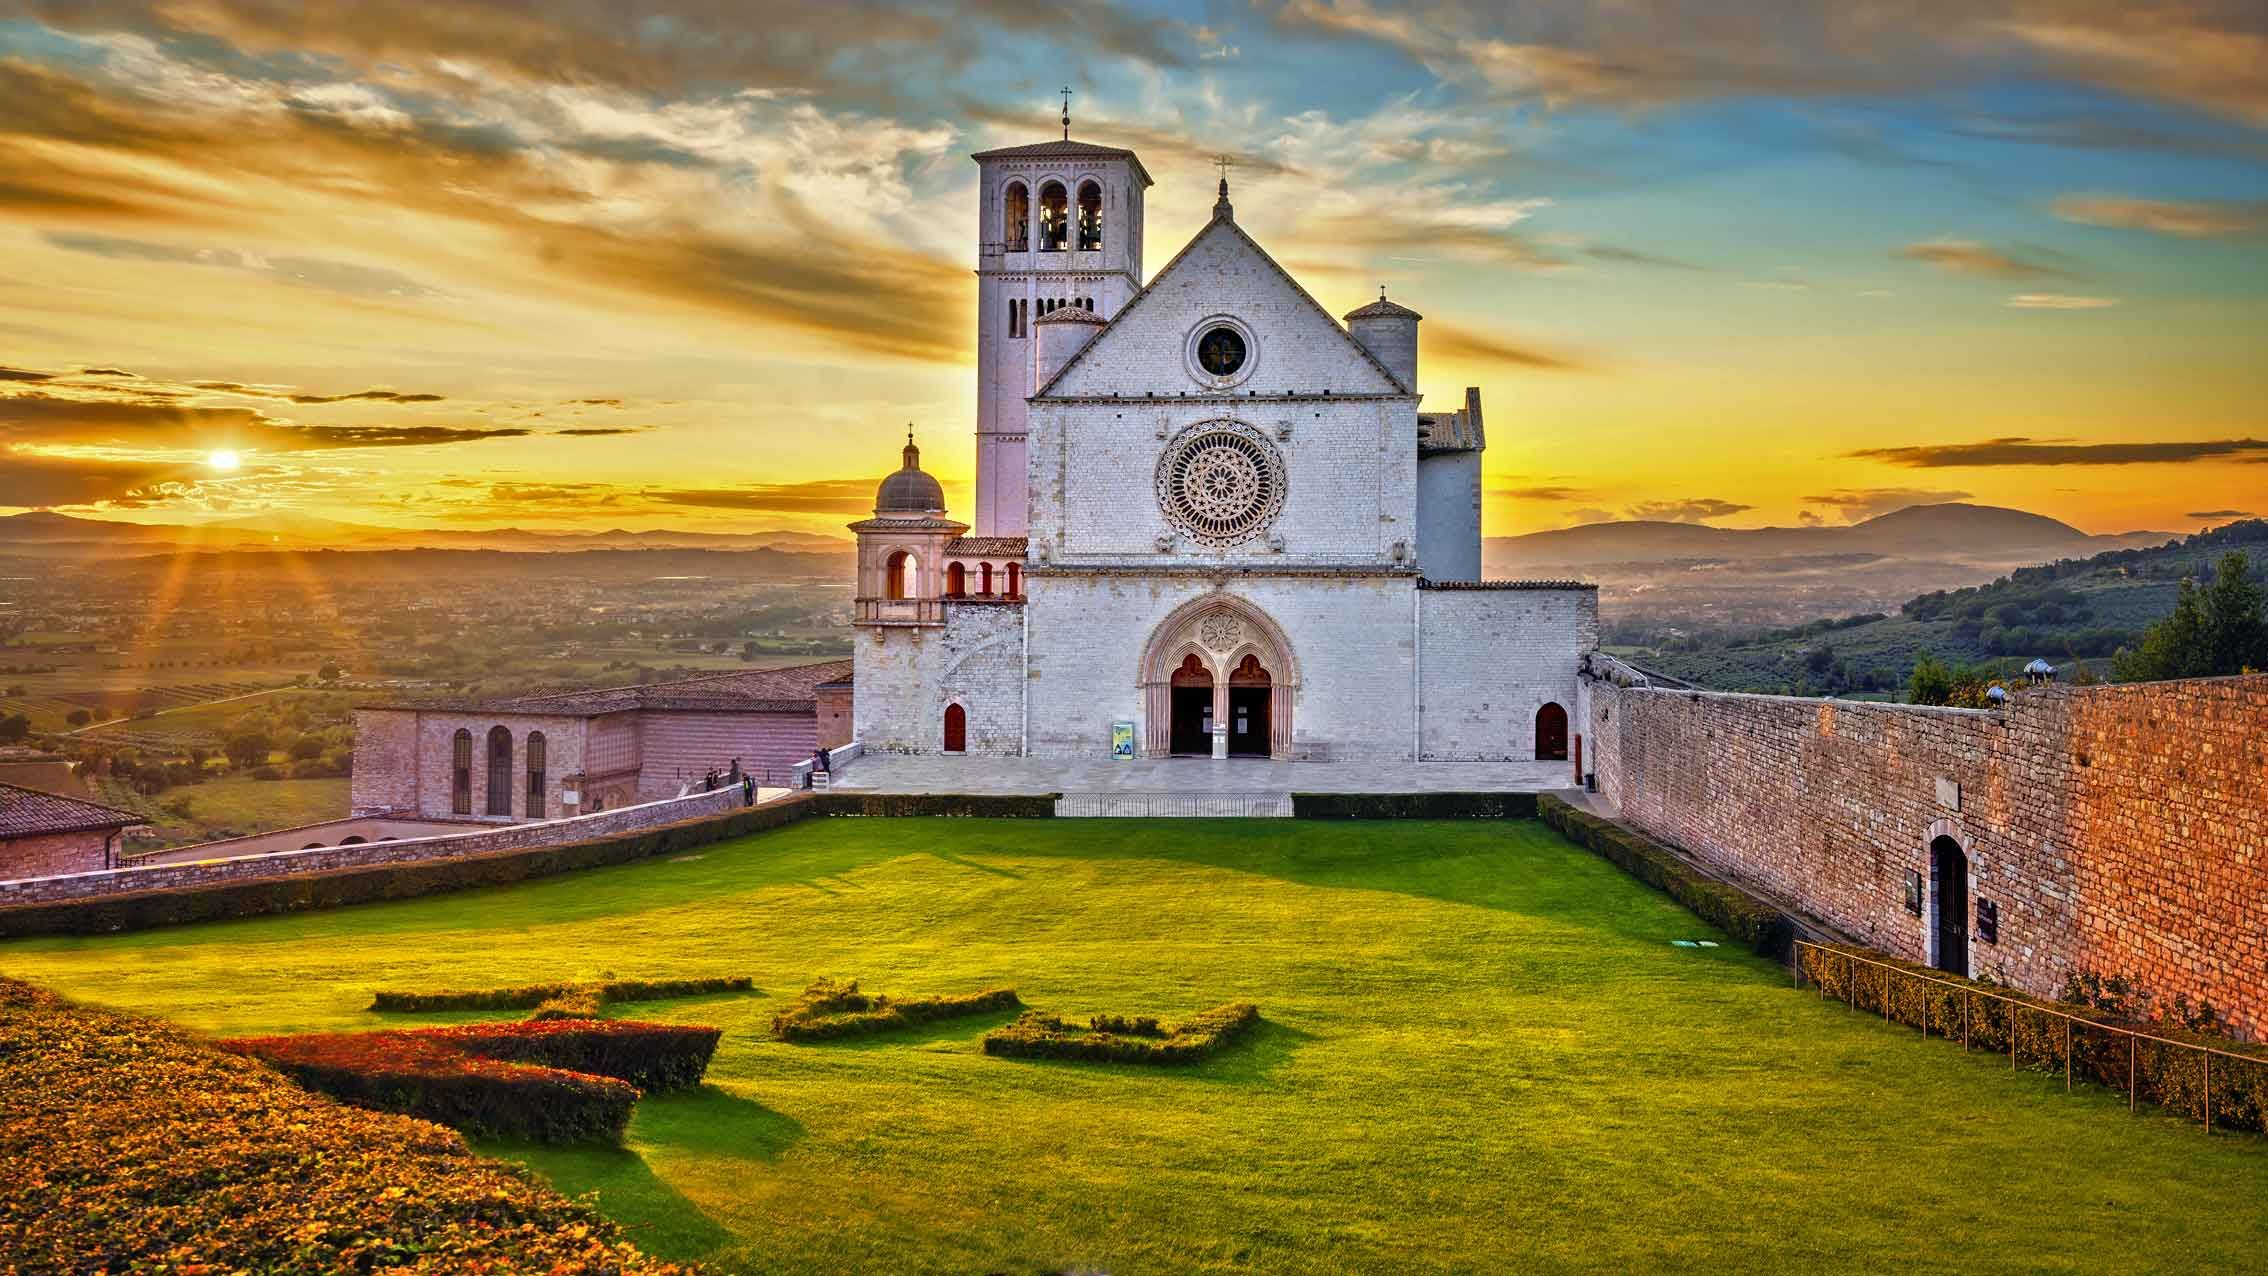 Assisi-san-francesco-basilica-church